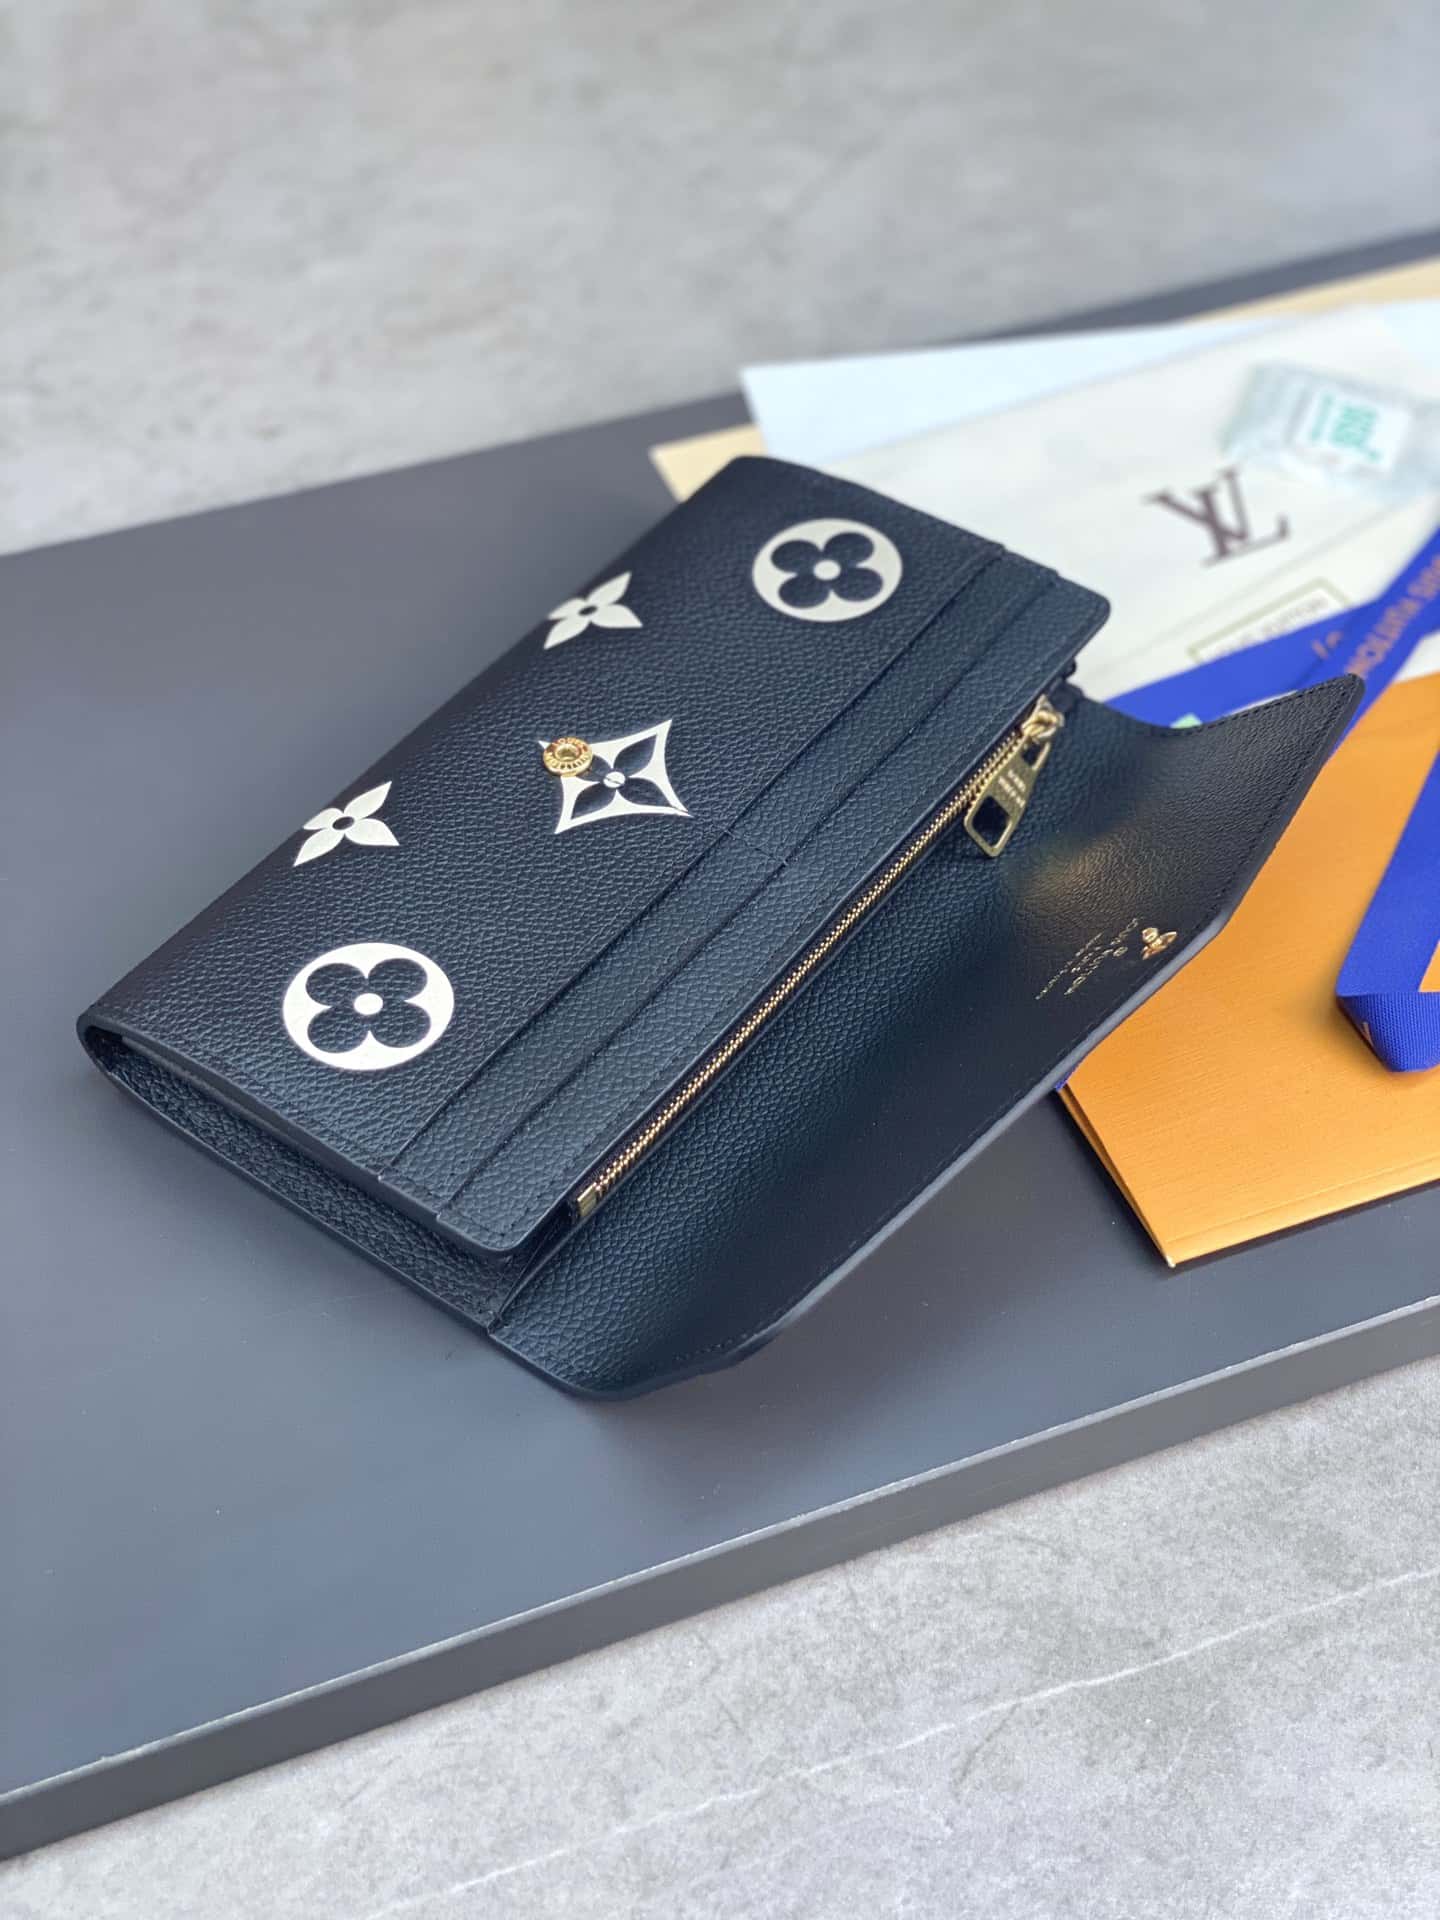 Shop Louis Vuitton MONOGRAM EMPREINTE Sarah wallet (M80496) by